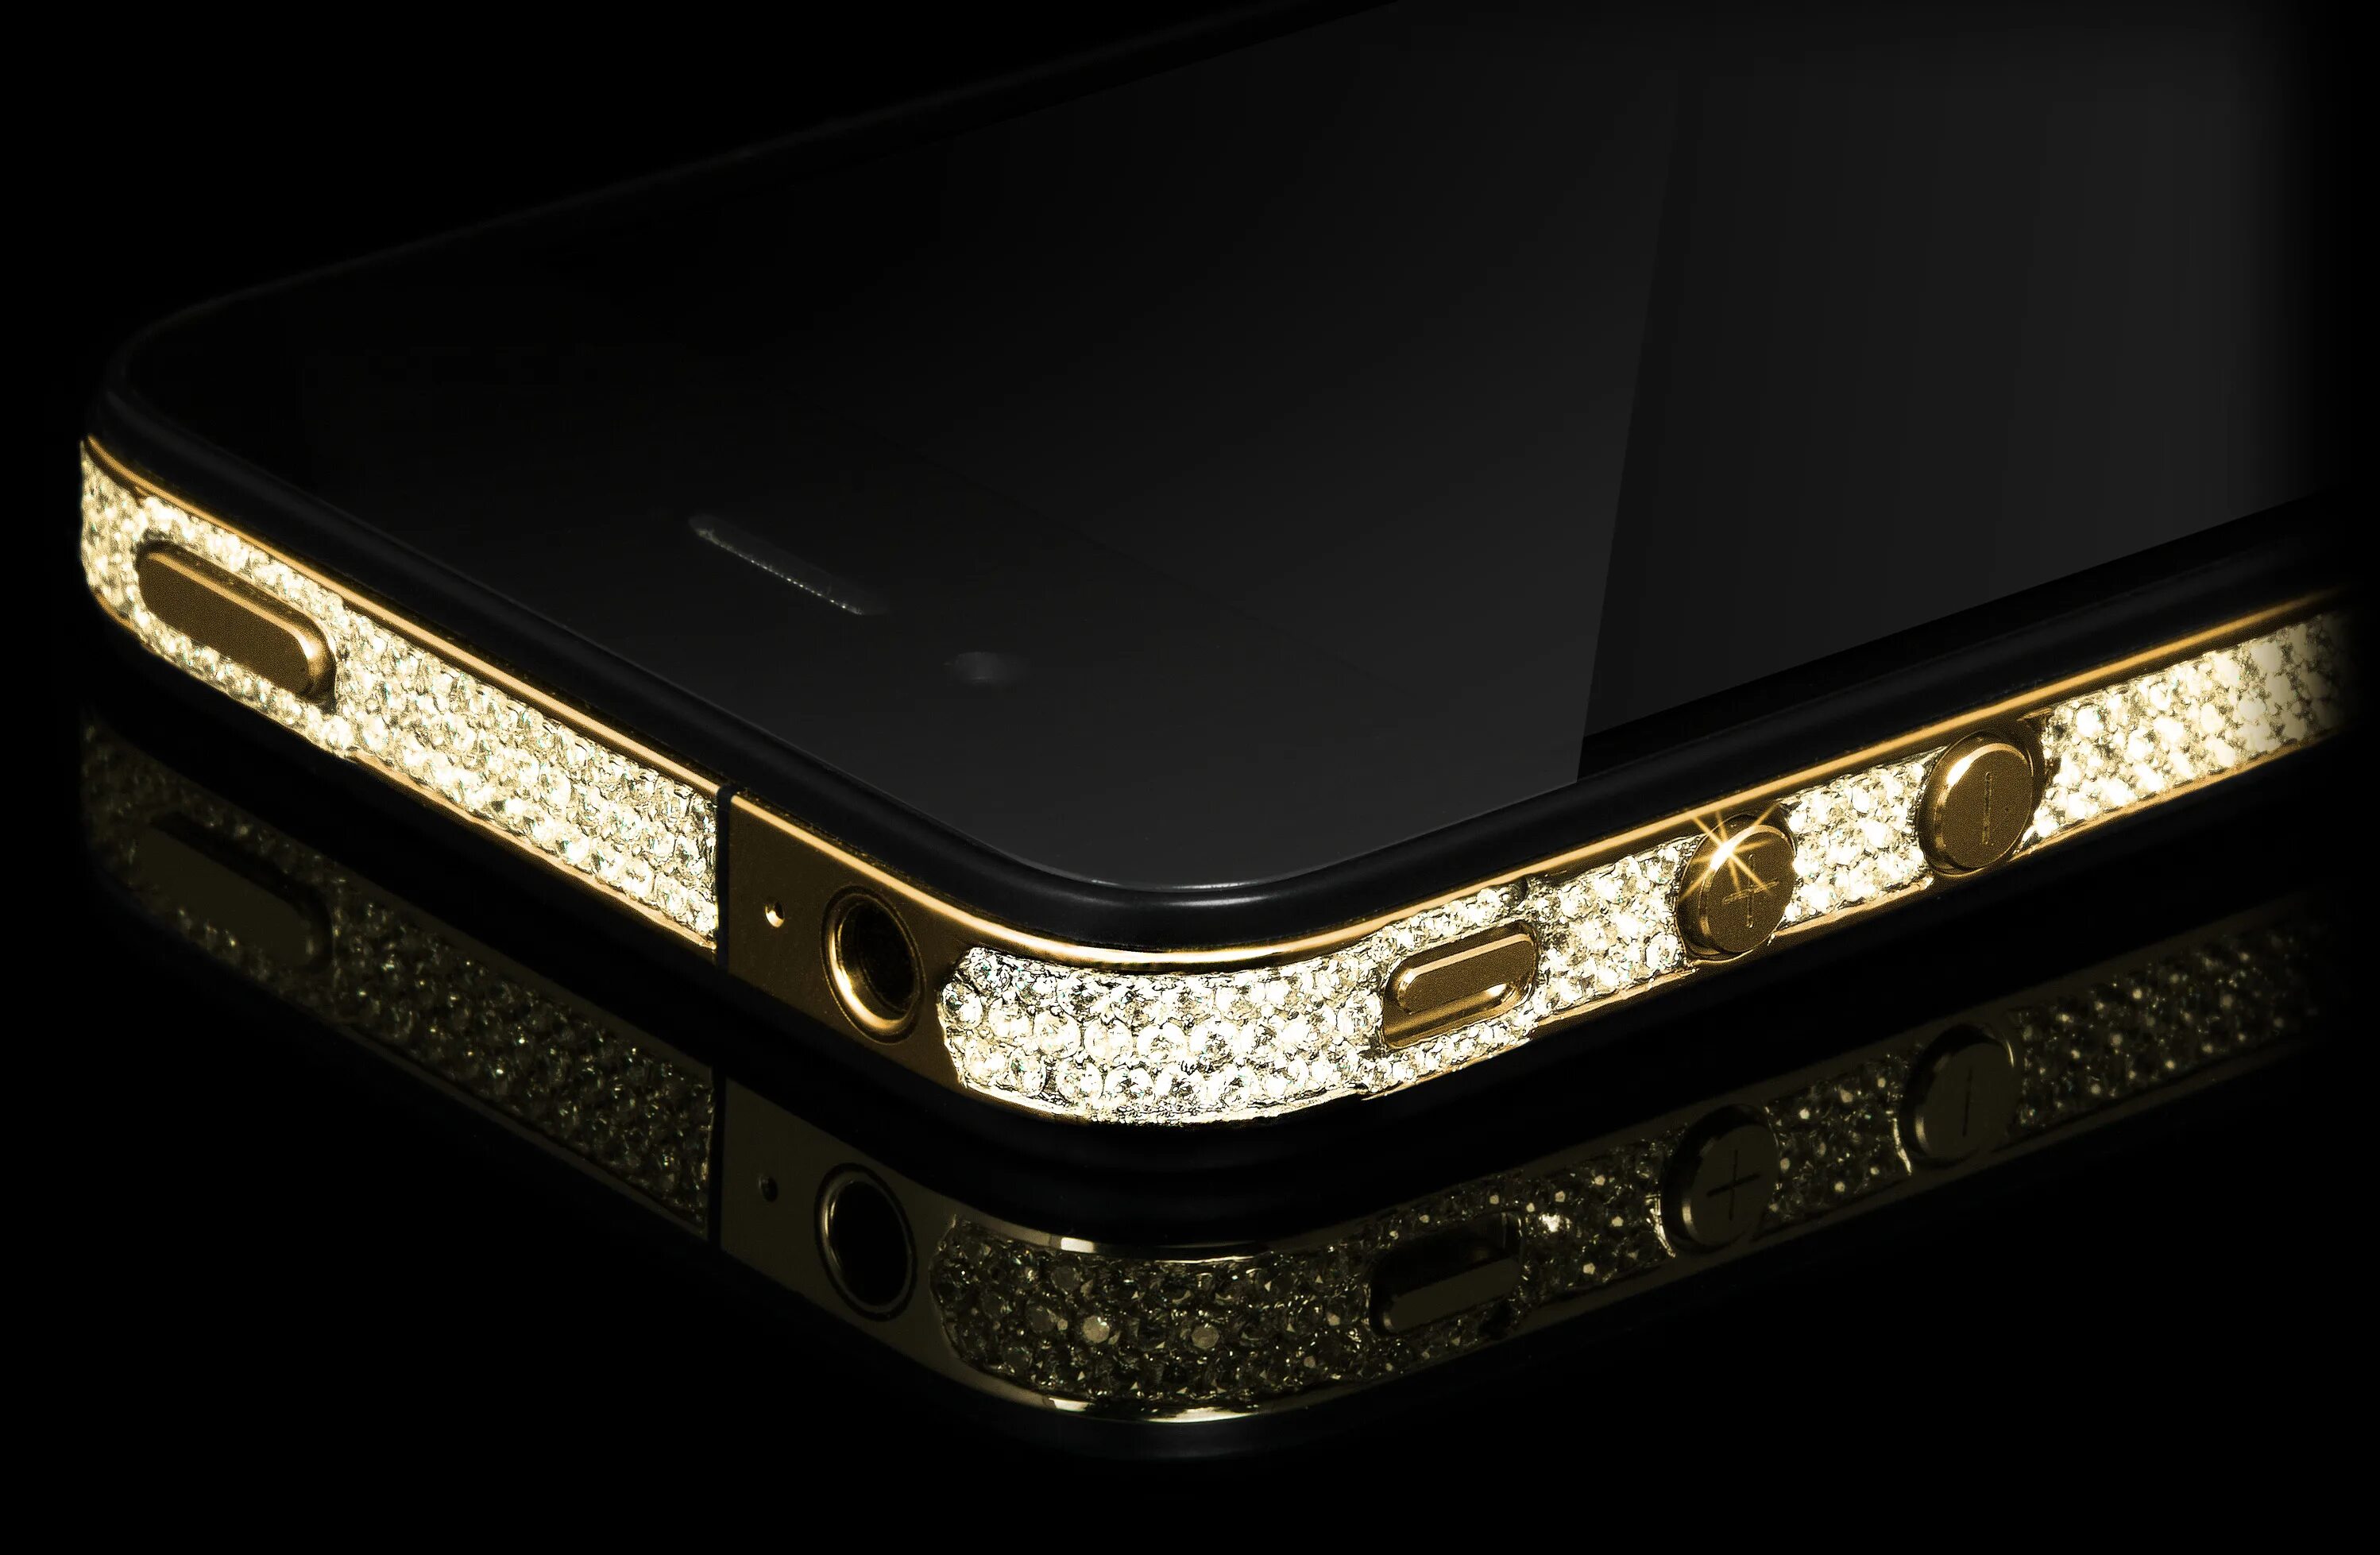 Elite gold. Iphone 4s Gold. Iphone 4 Diamond Rose. Айфон Даймонд Роуз эдитион. Iphone 4 Gold.